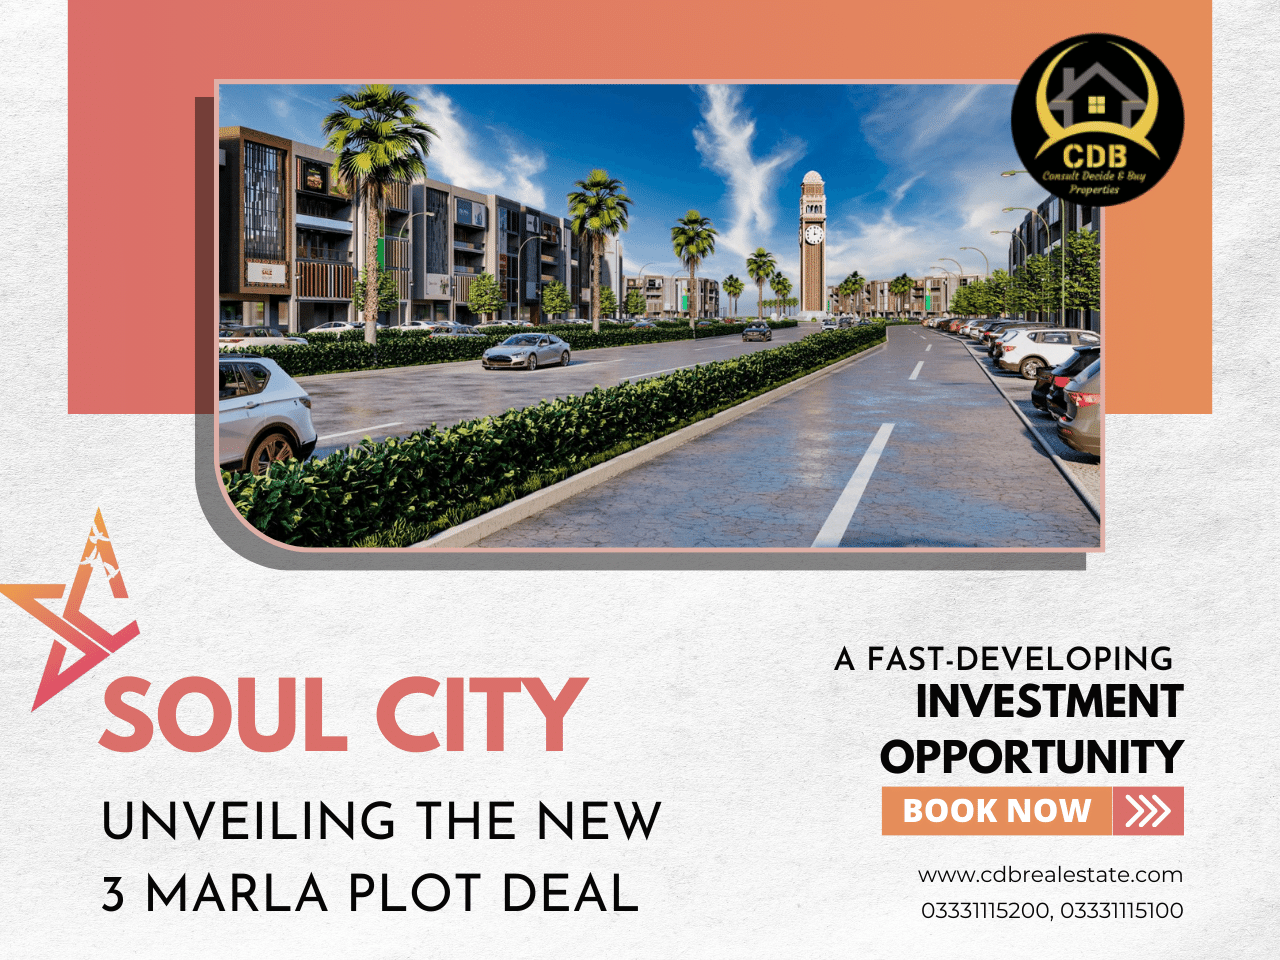 Soul City 3 Marla Plot Deal